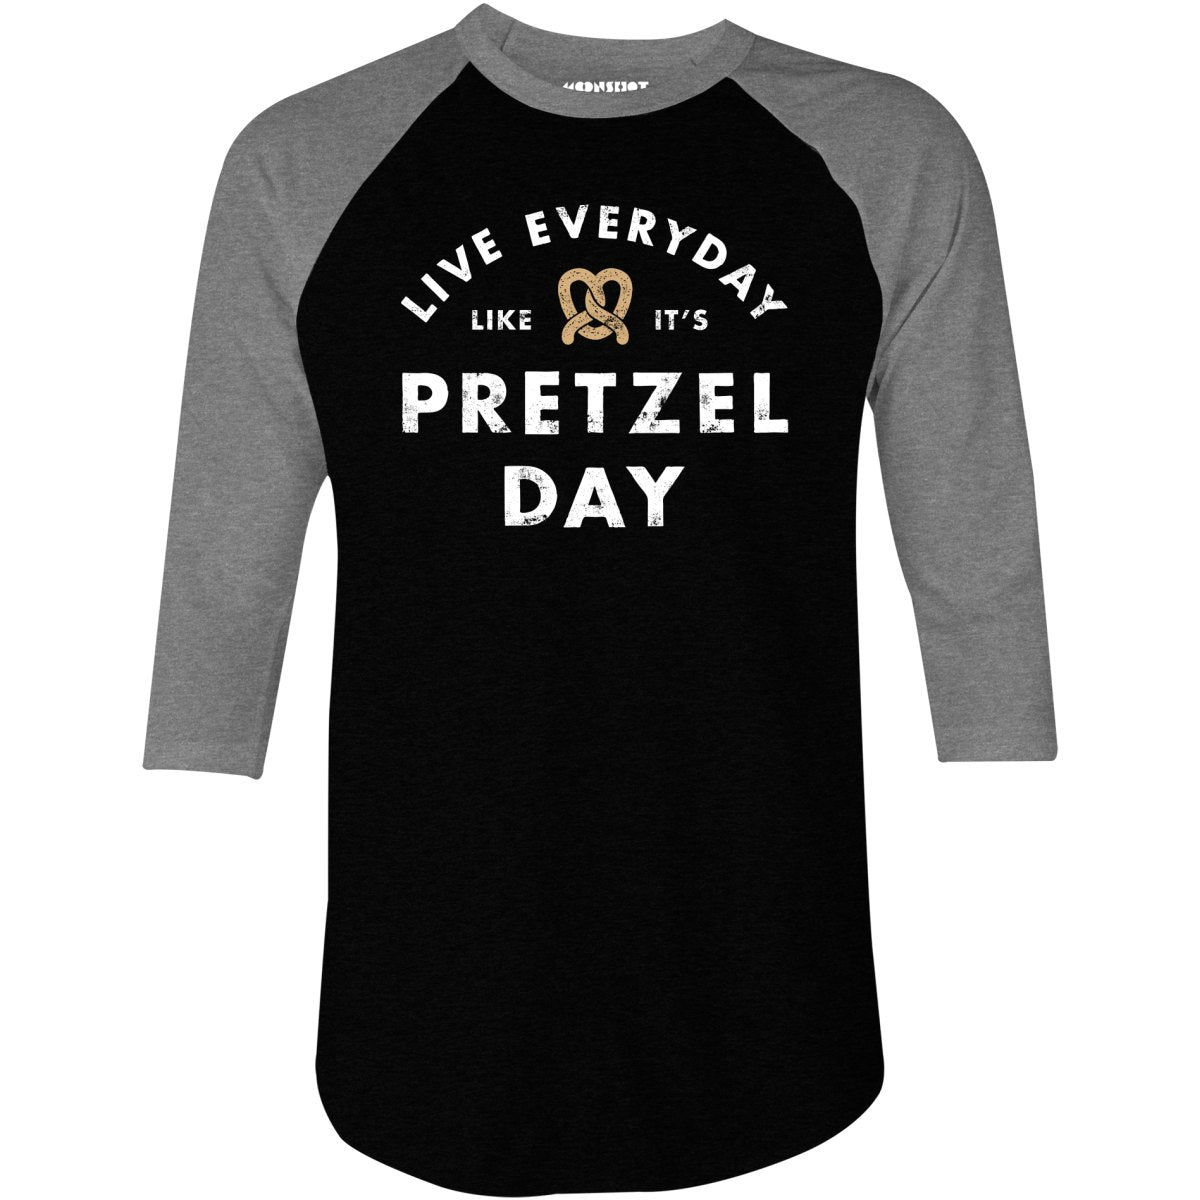 Live Everyday Like It's Pretzel Day - 3/4 Sleeve Raglan T-Shirt